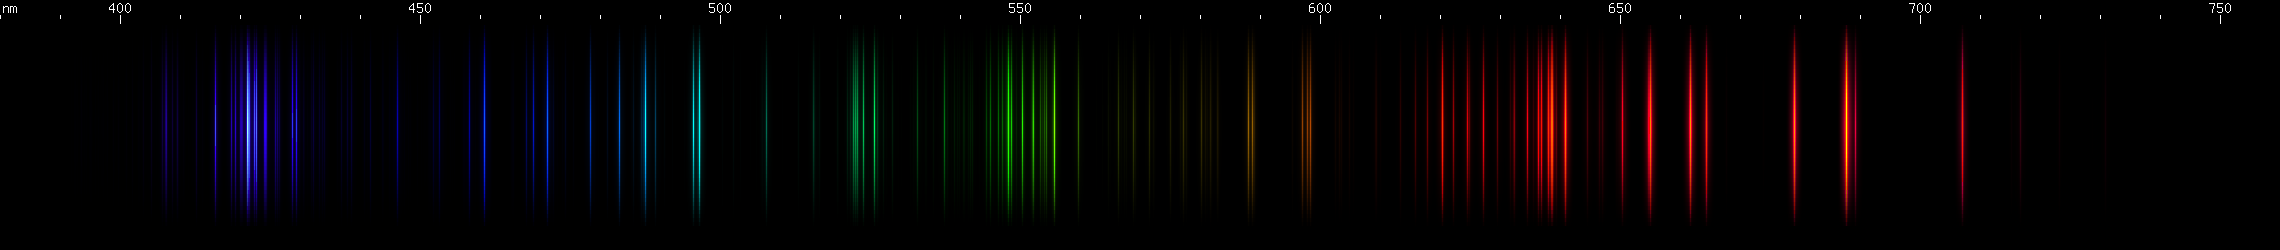 Spectral Lines of Strontium